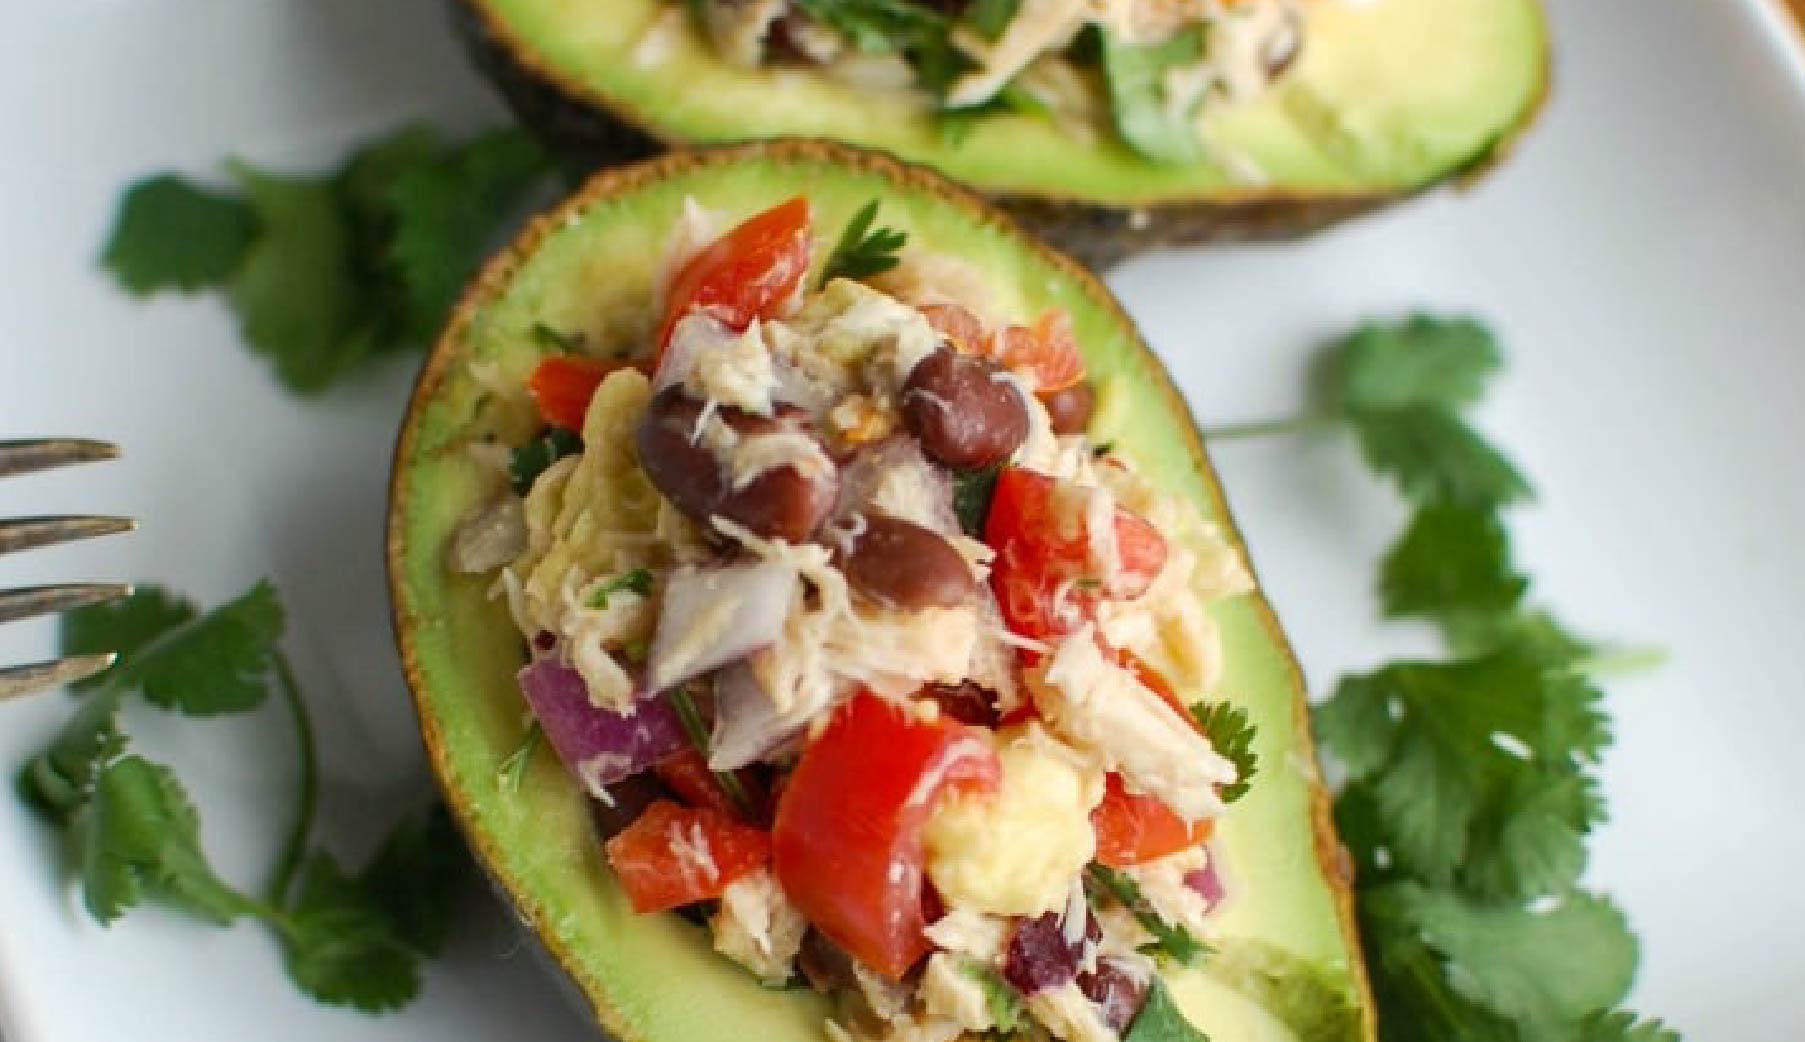 Mexican Tuna Salad Stuffed Avocados 5 Great Tuna Recipes